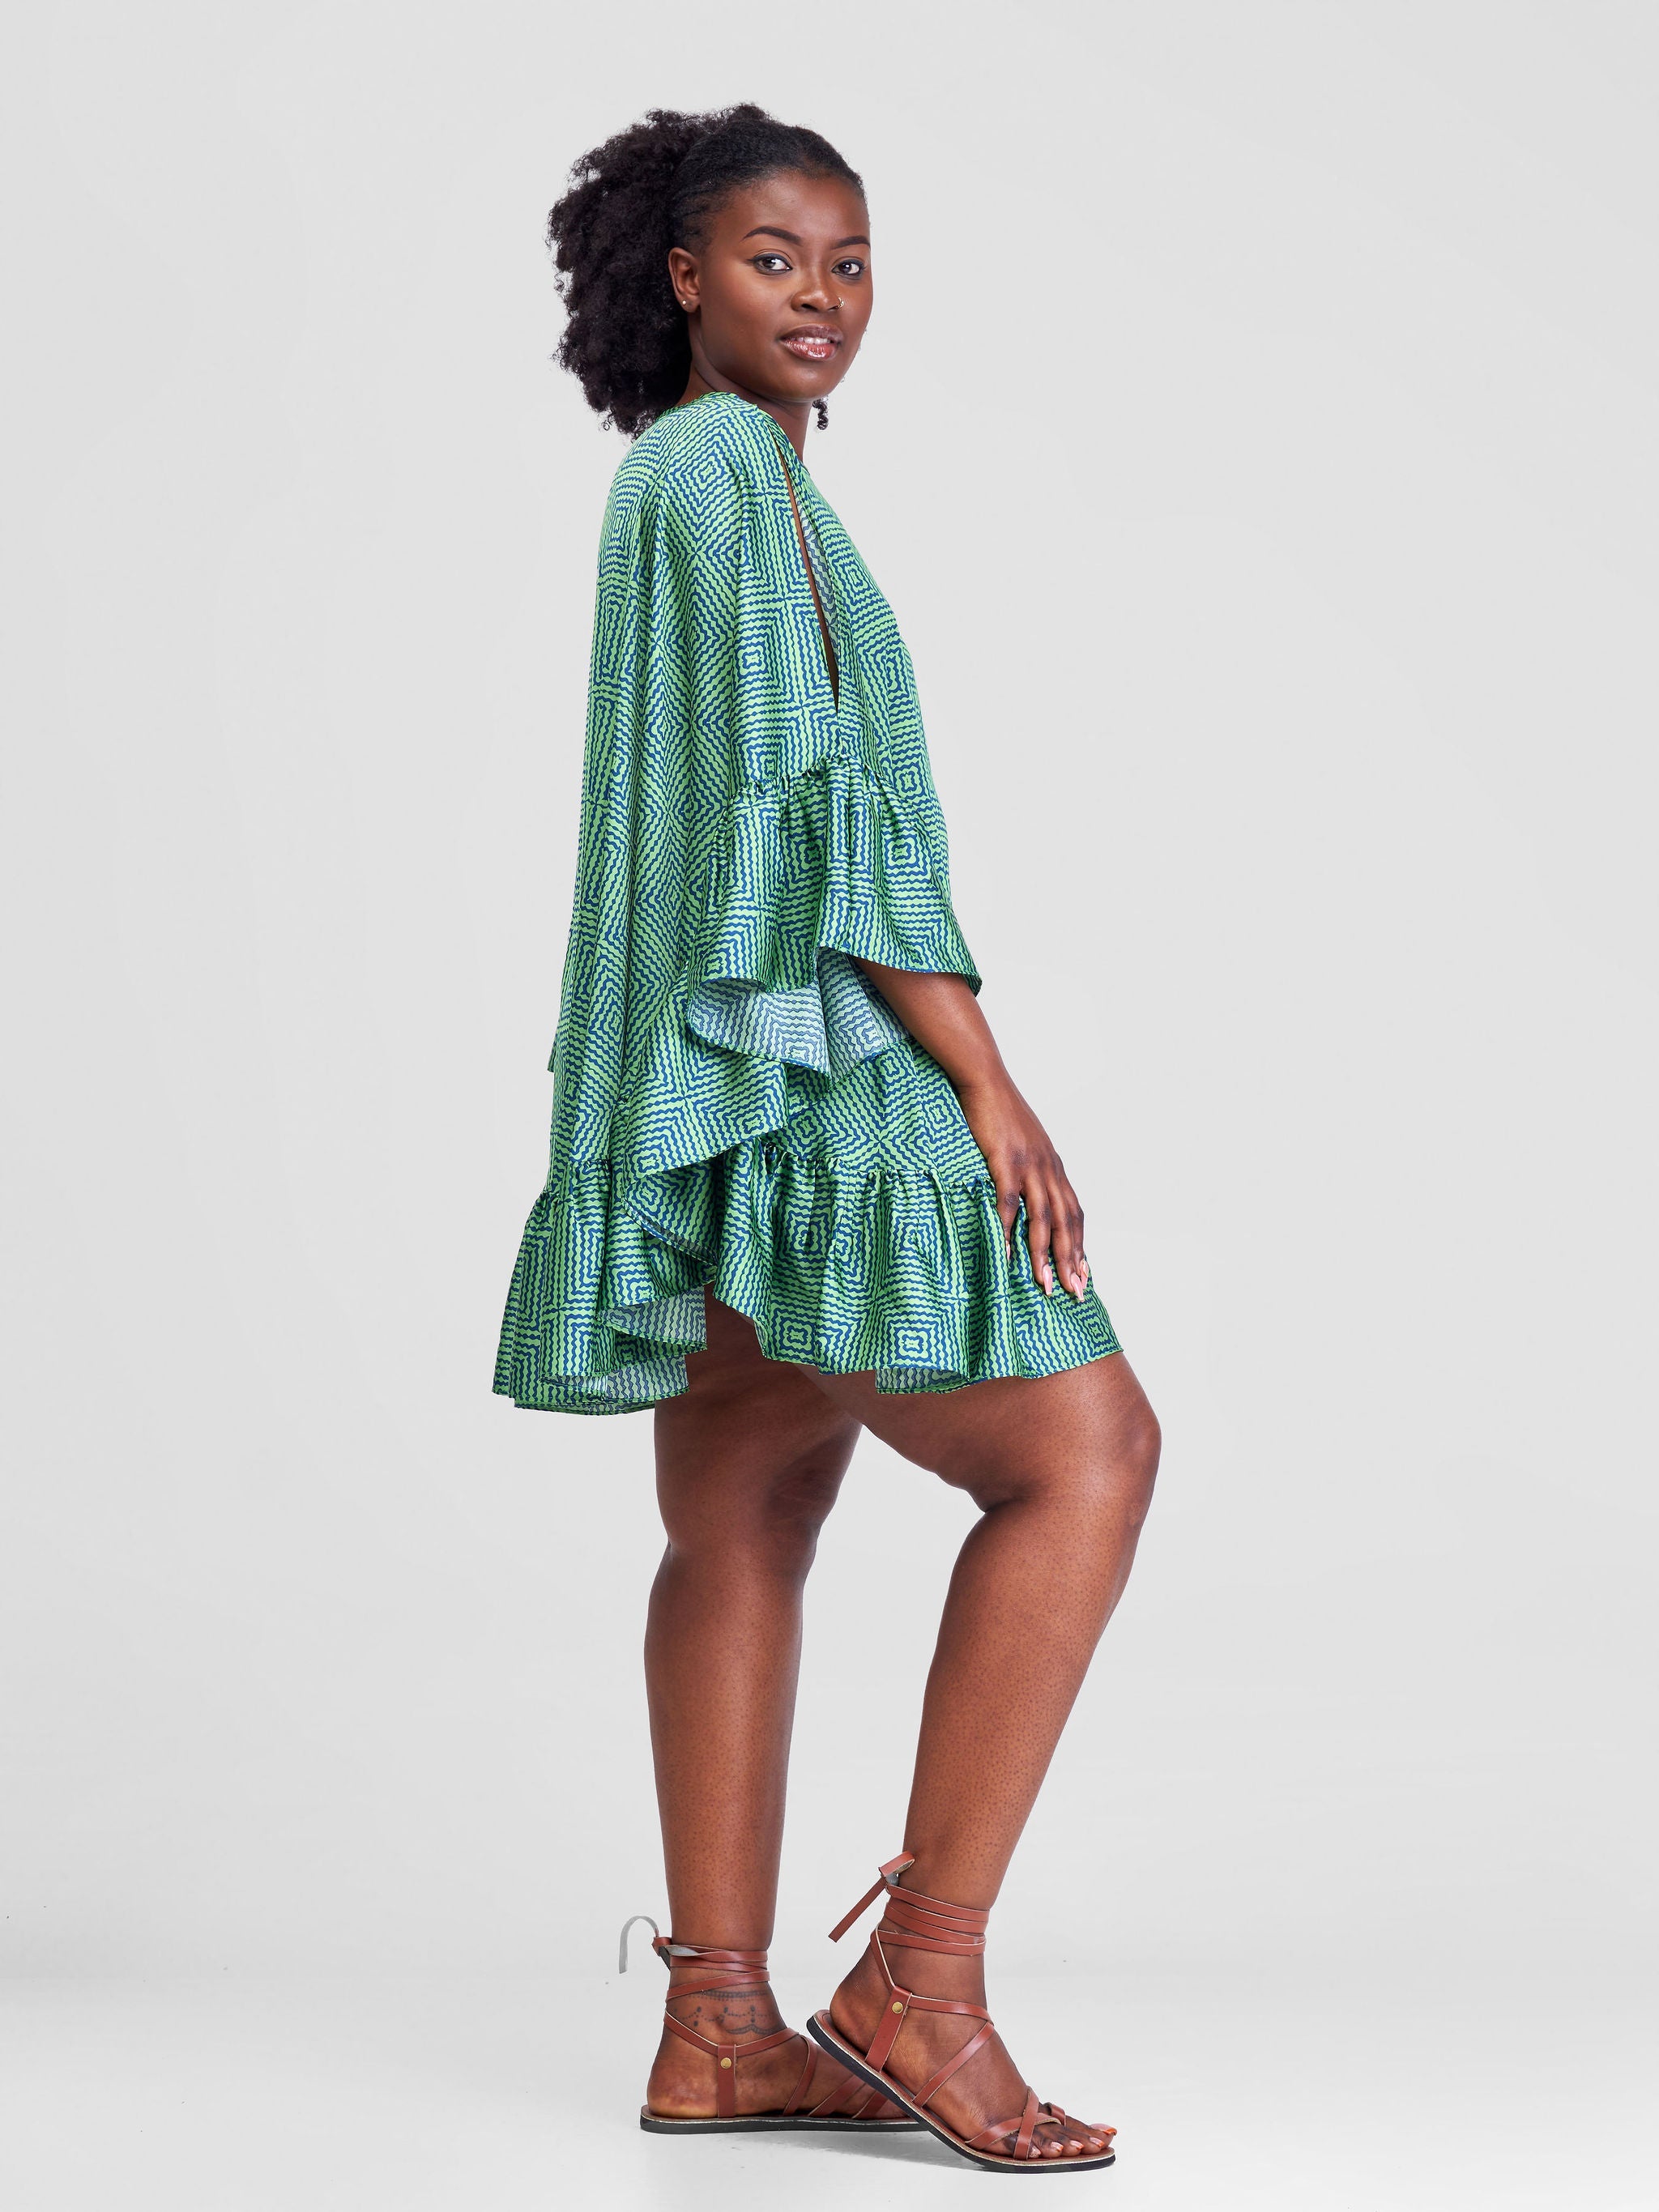 Vivo Malindi Tunic Dress With Frills - Green / Blue Abstract Print